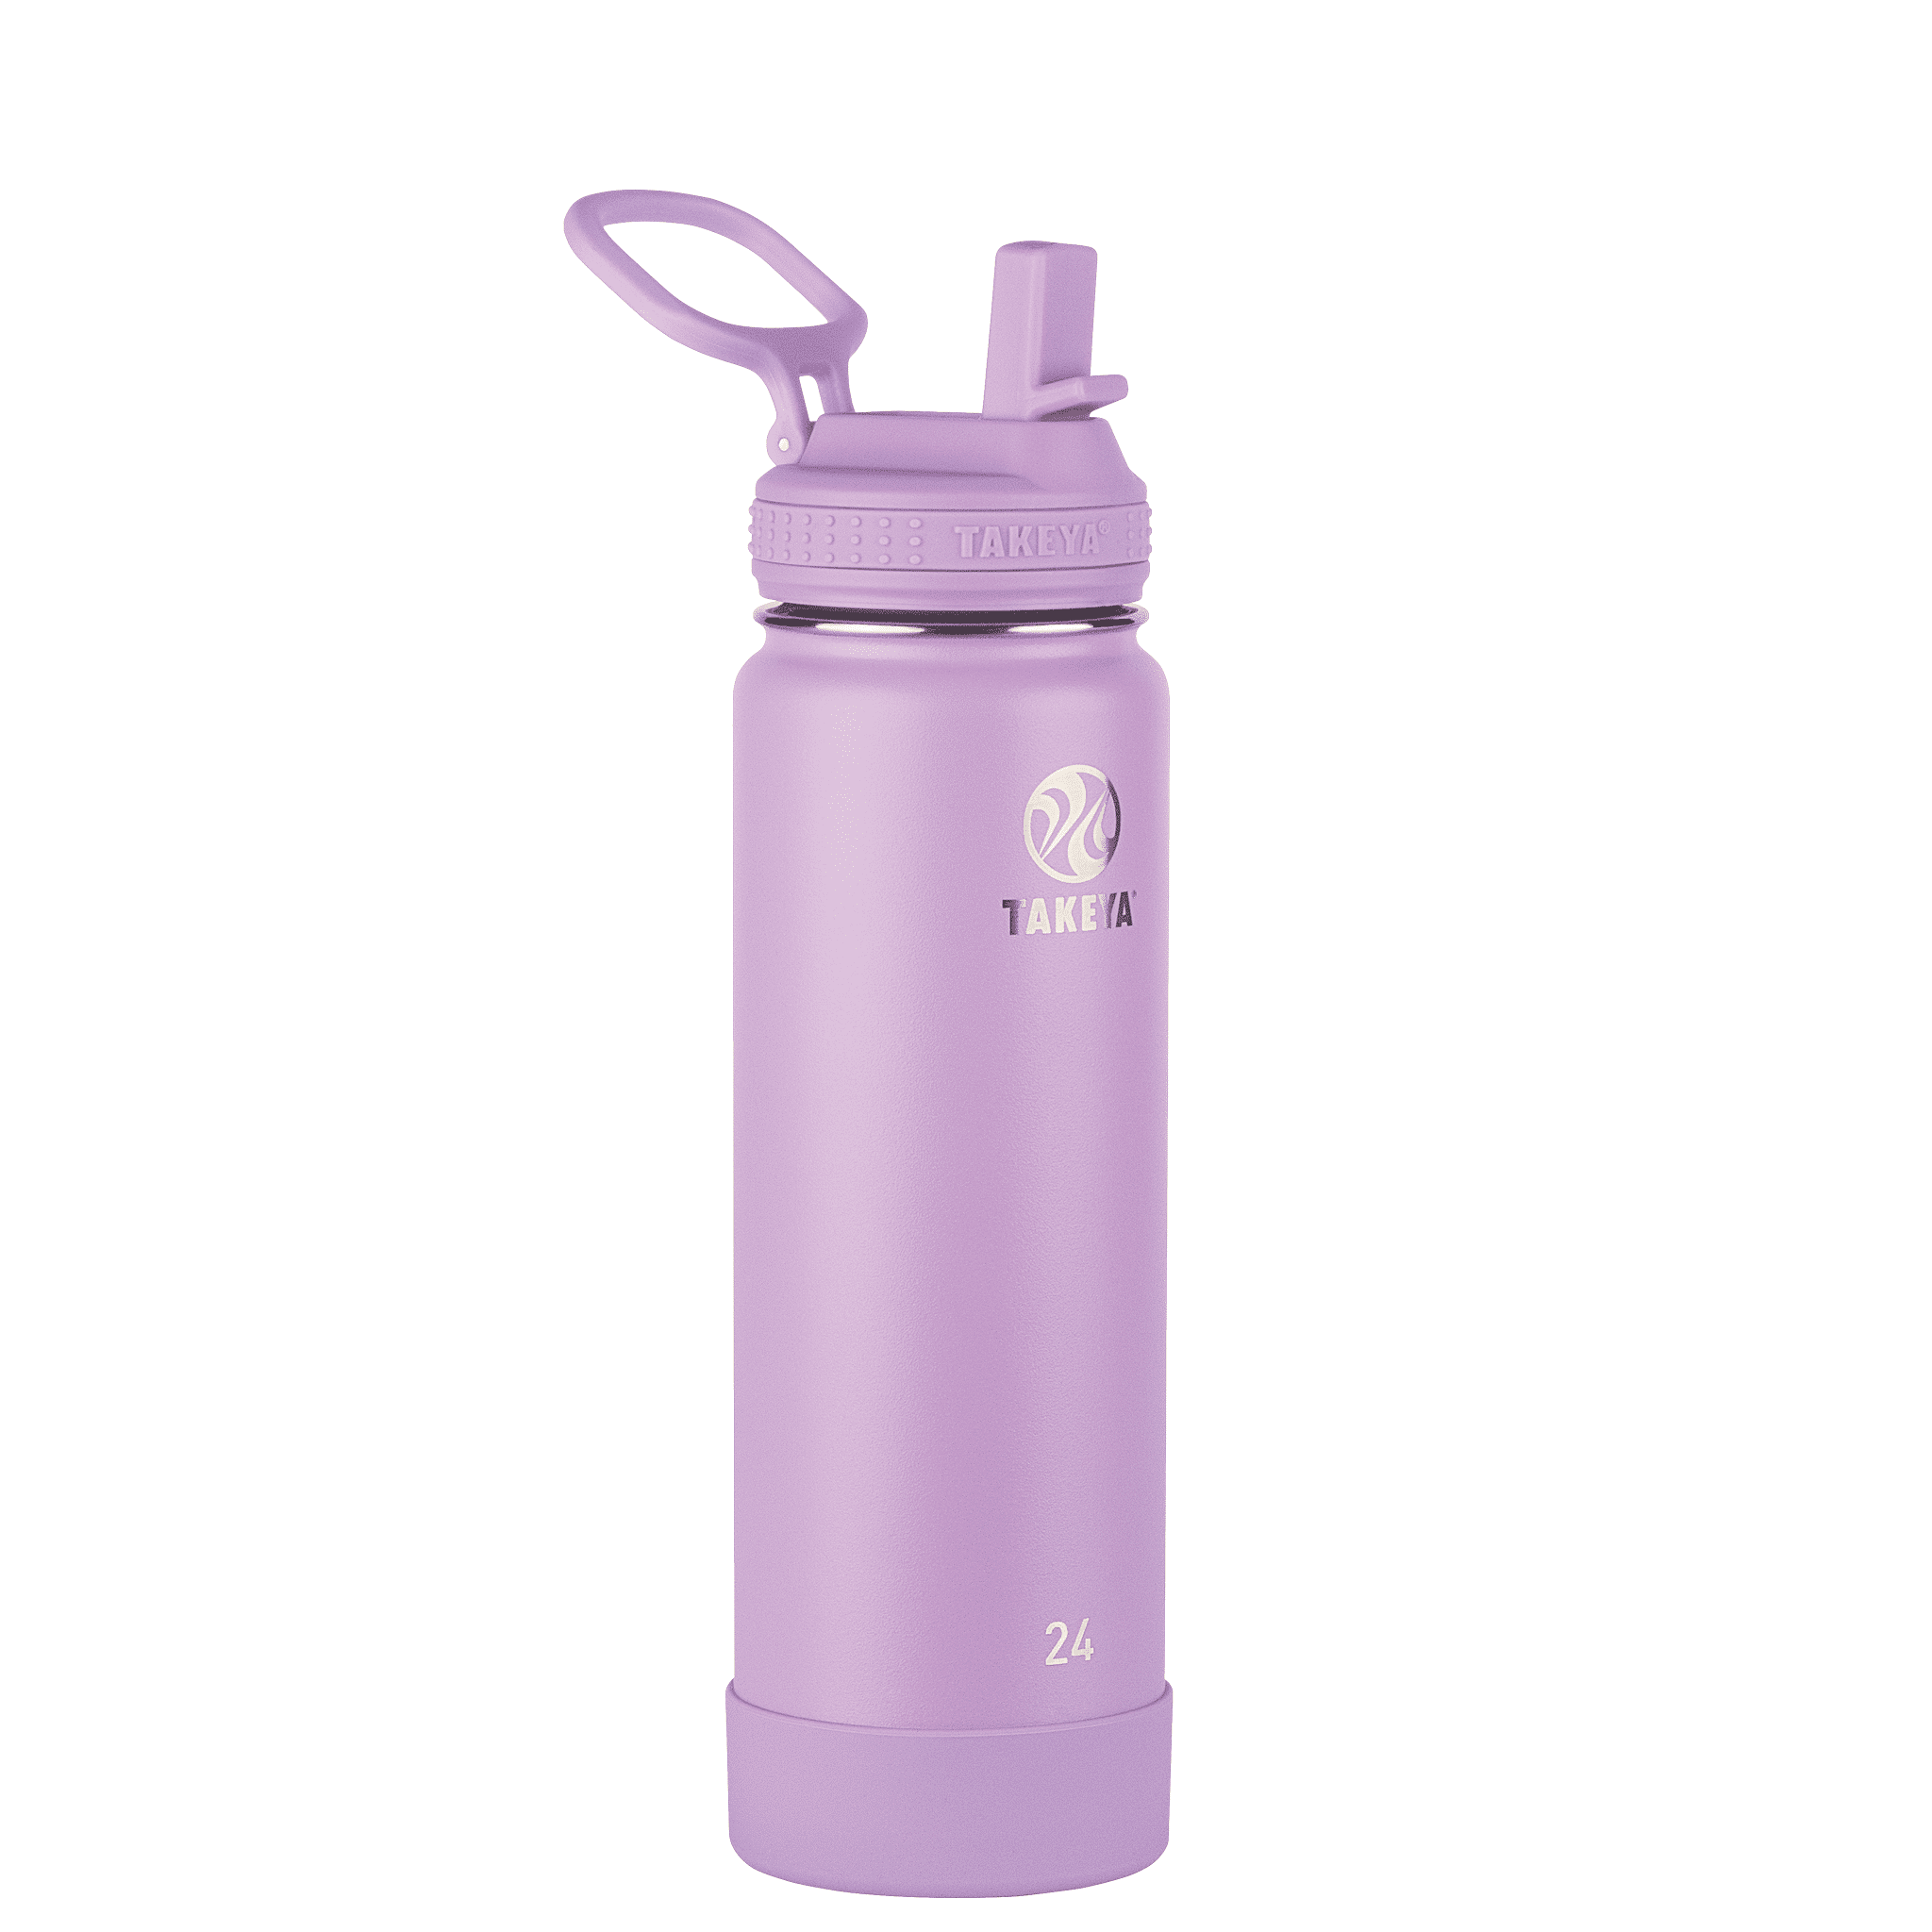 Takeya Actives Stainless Steel Water Bottle w/Straw lid, 24oz Lilac Stainless Steel Water Bottle With Straw Walmart